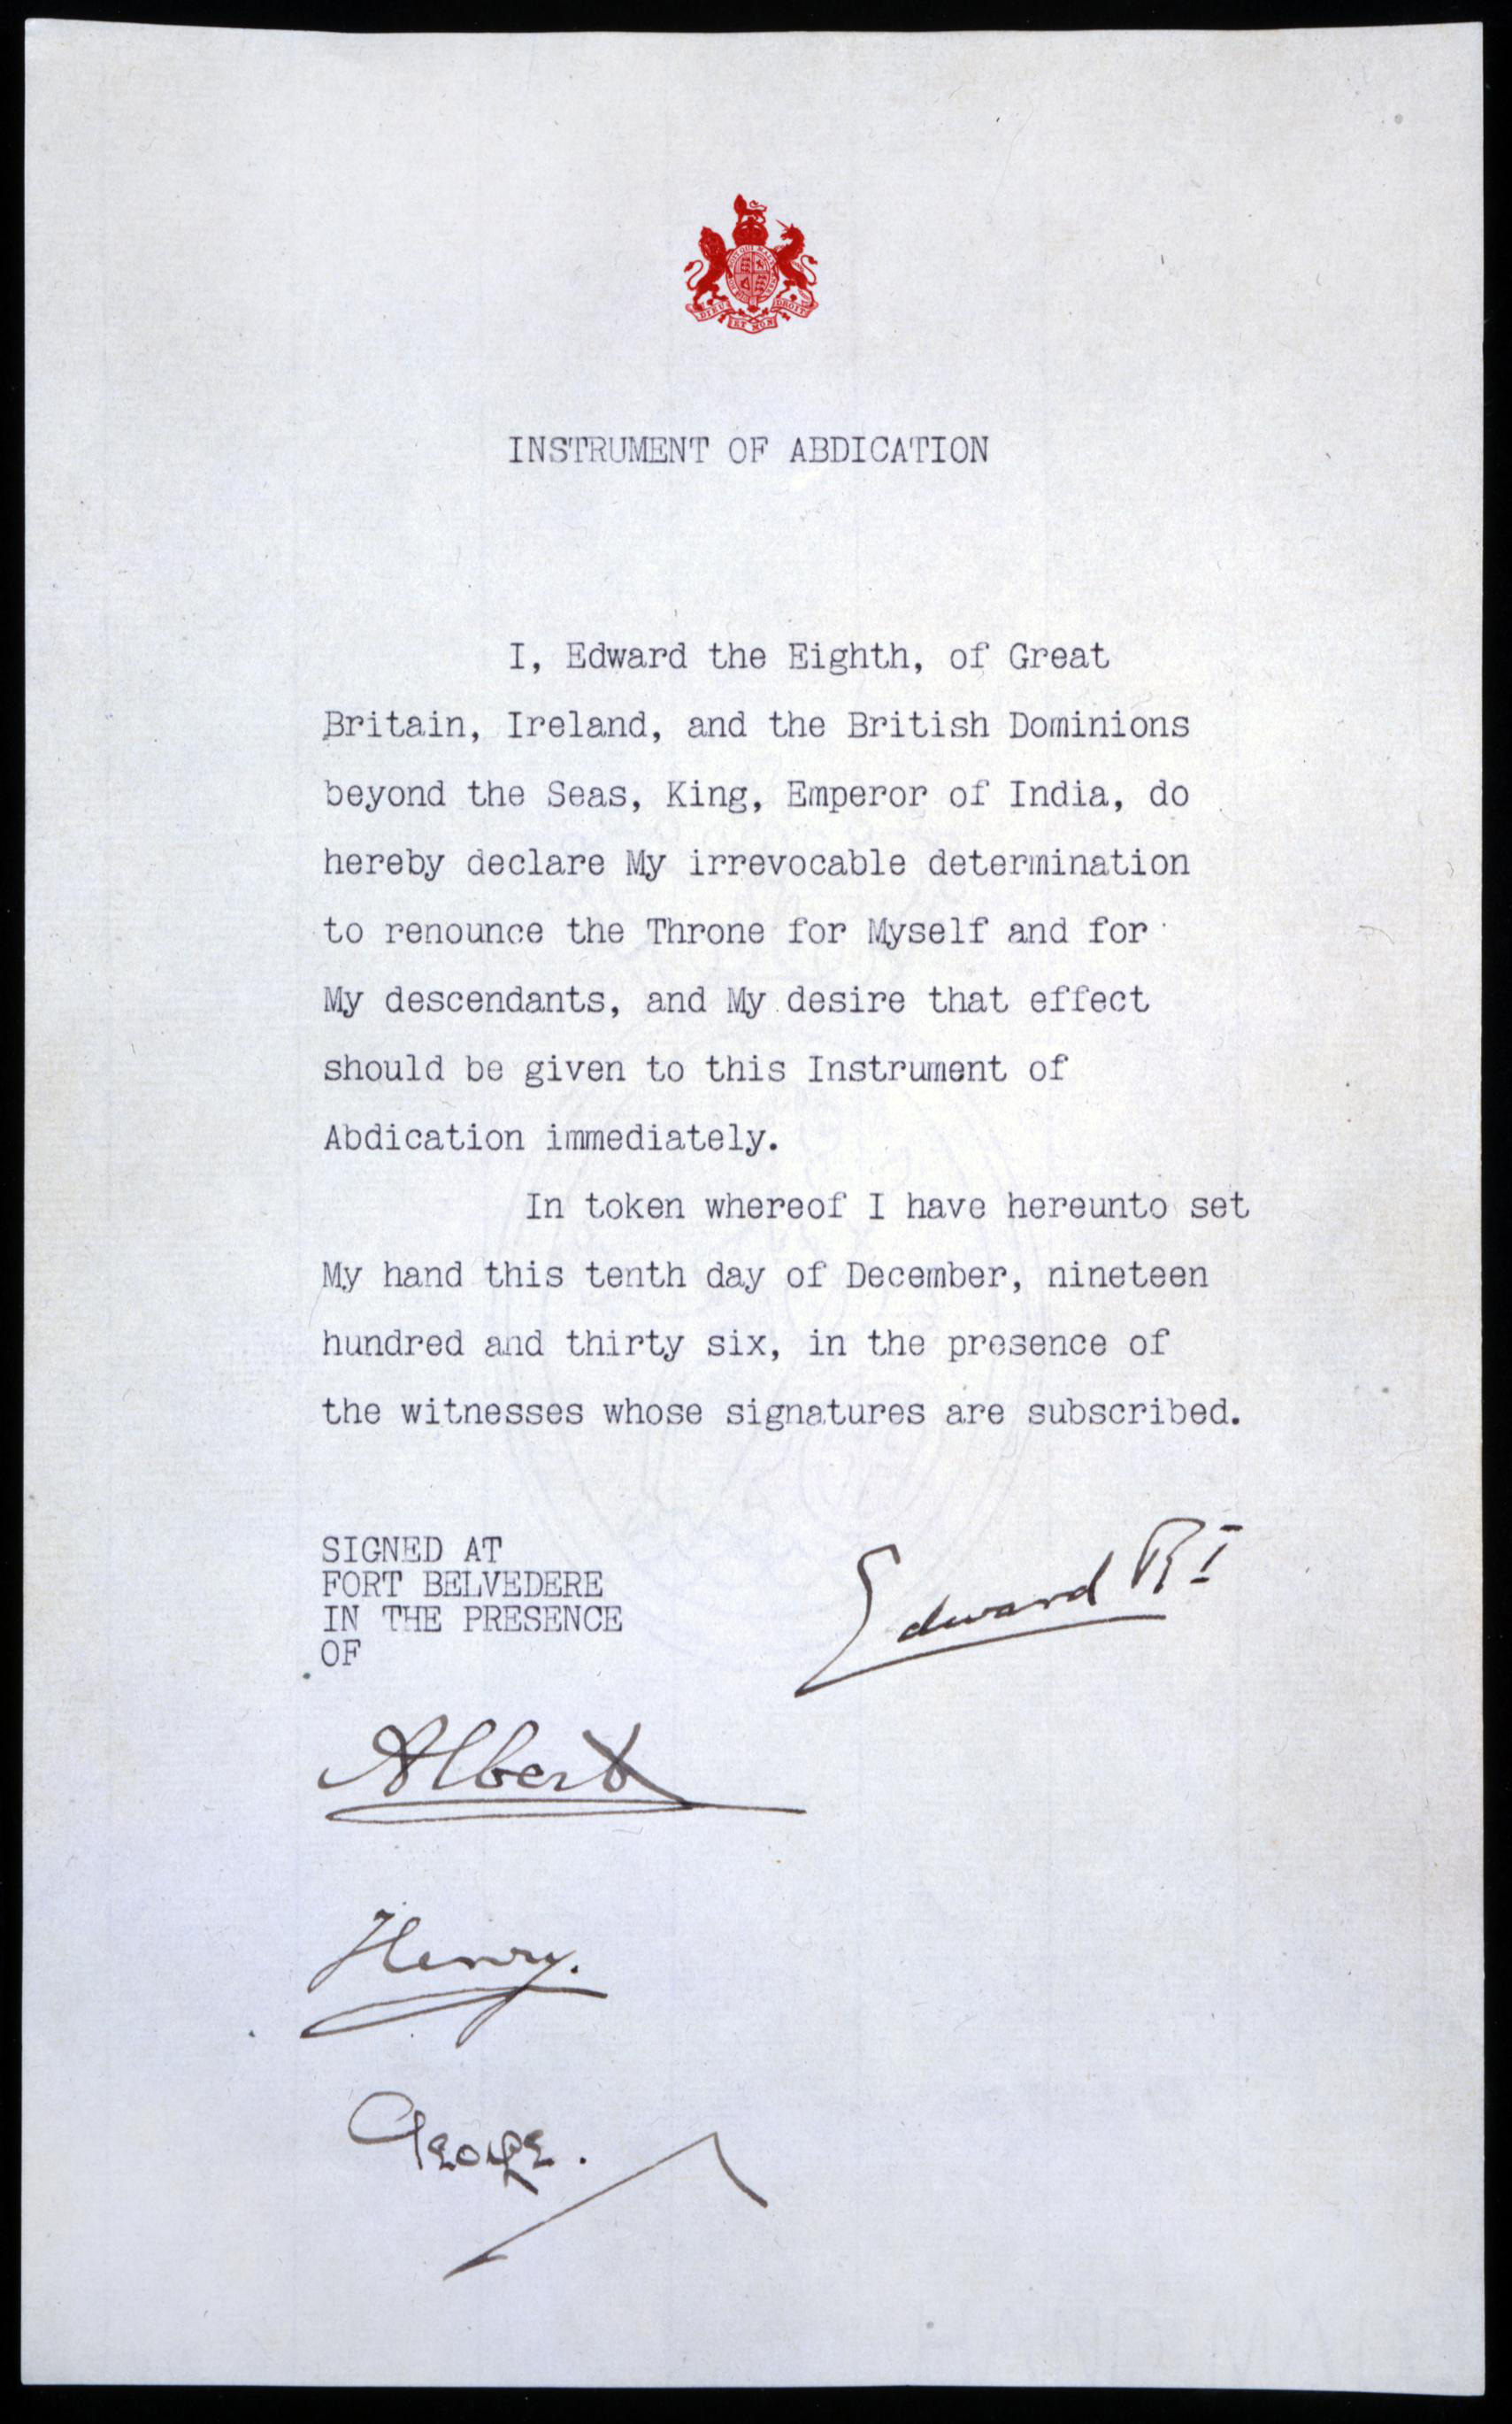 PC11/1 10 December 1936 abdication